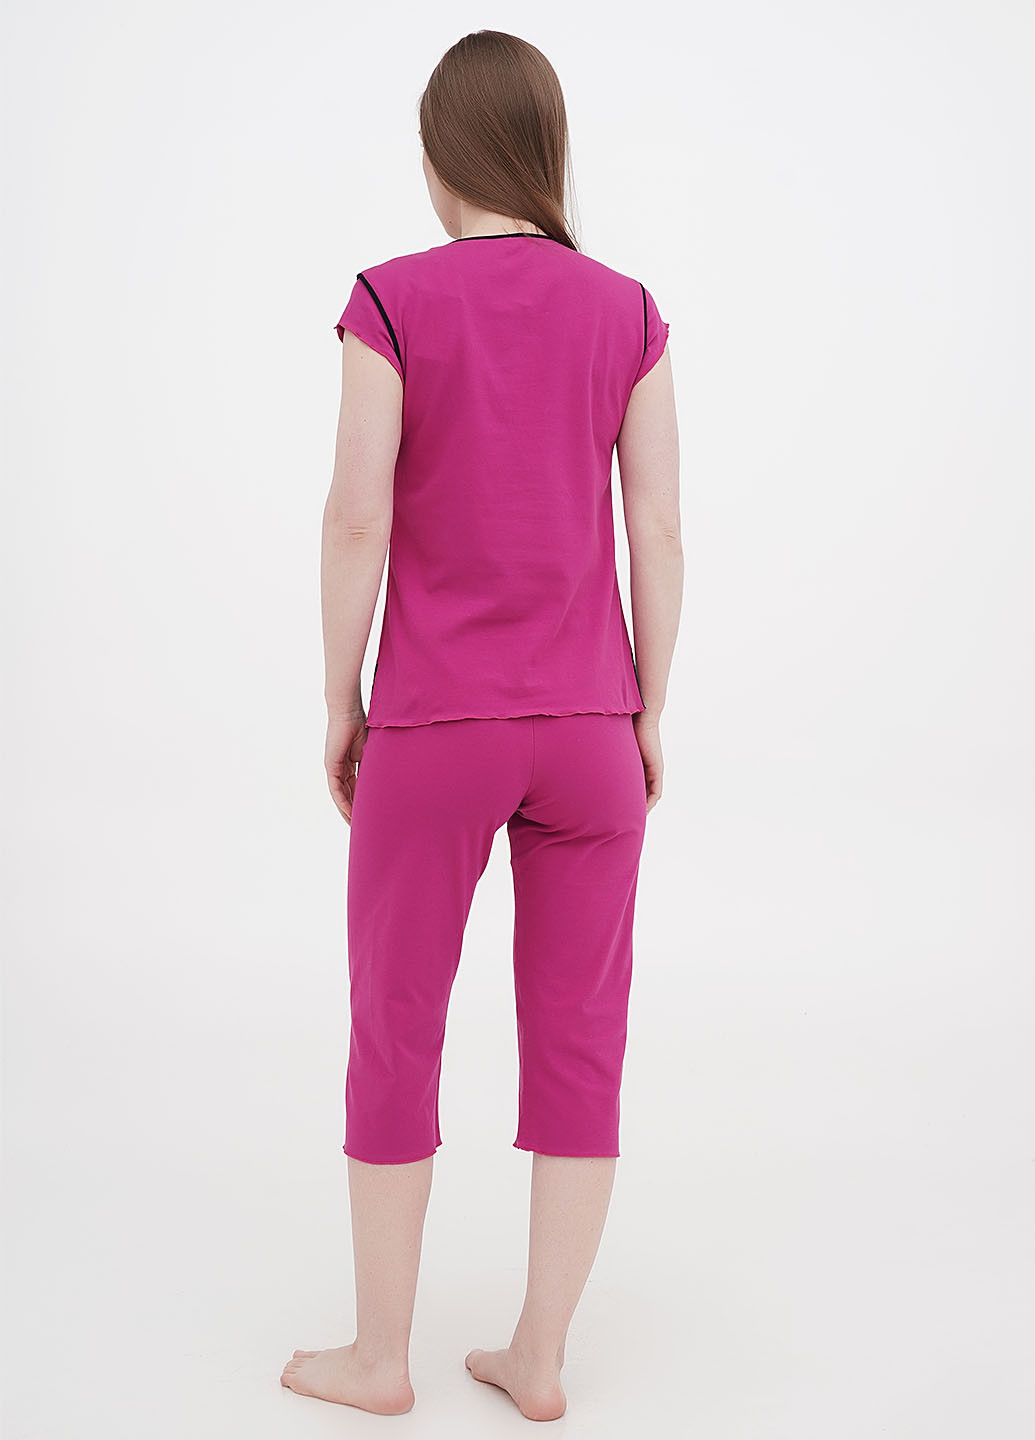 Розовая всесезон пижама (футболка, бриджи) футболка + бриджи Aniele